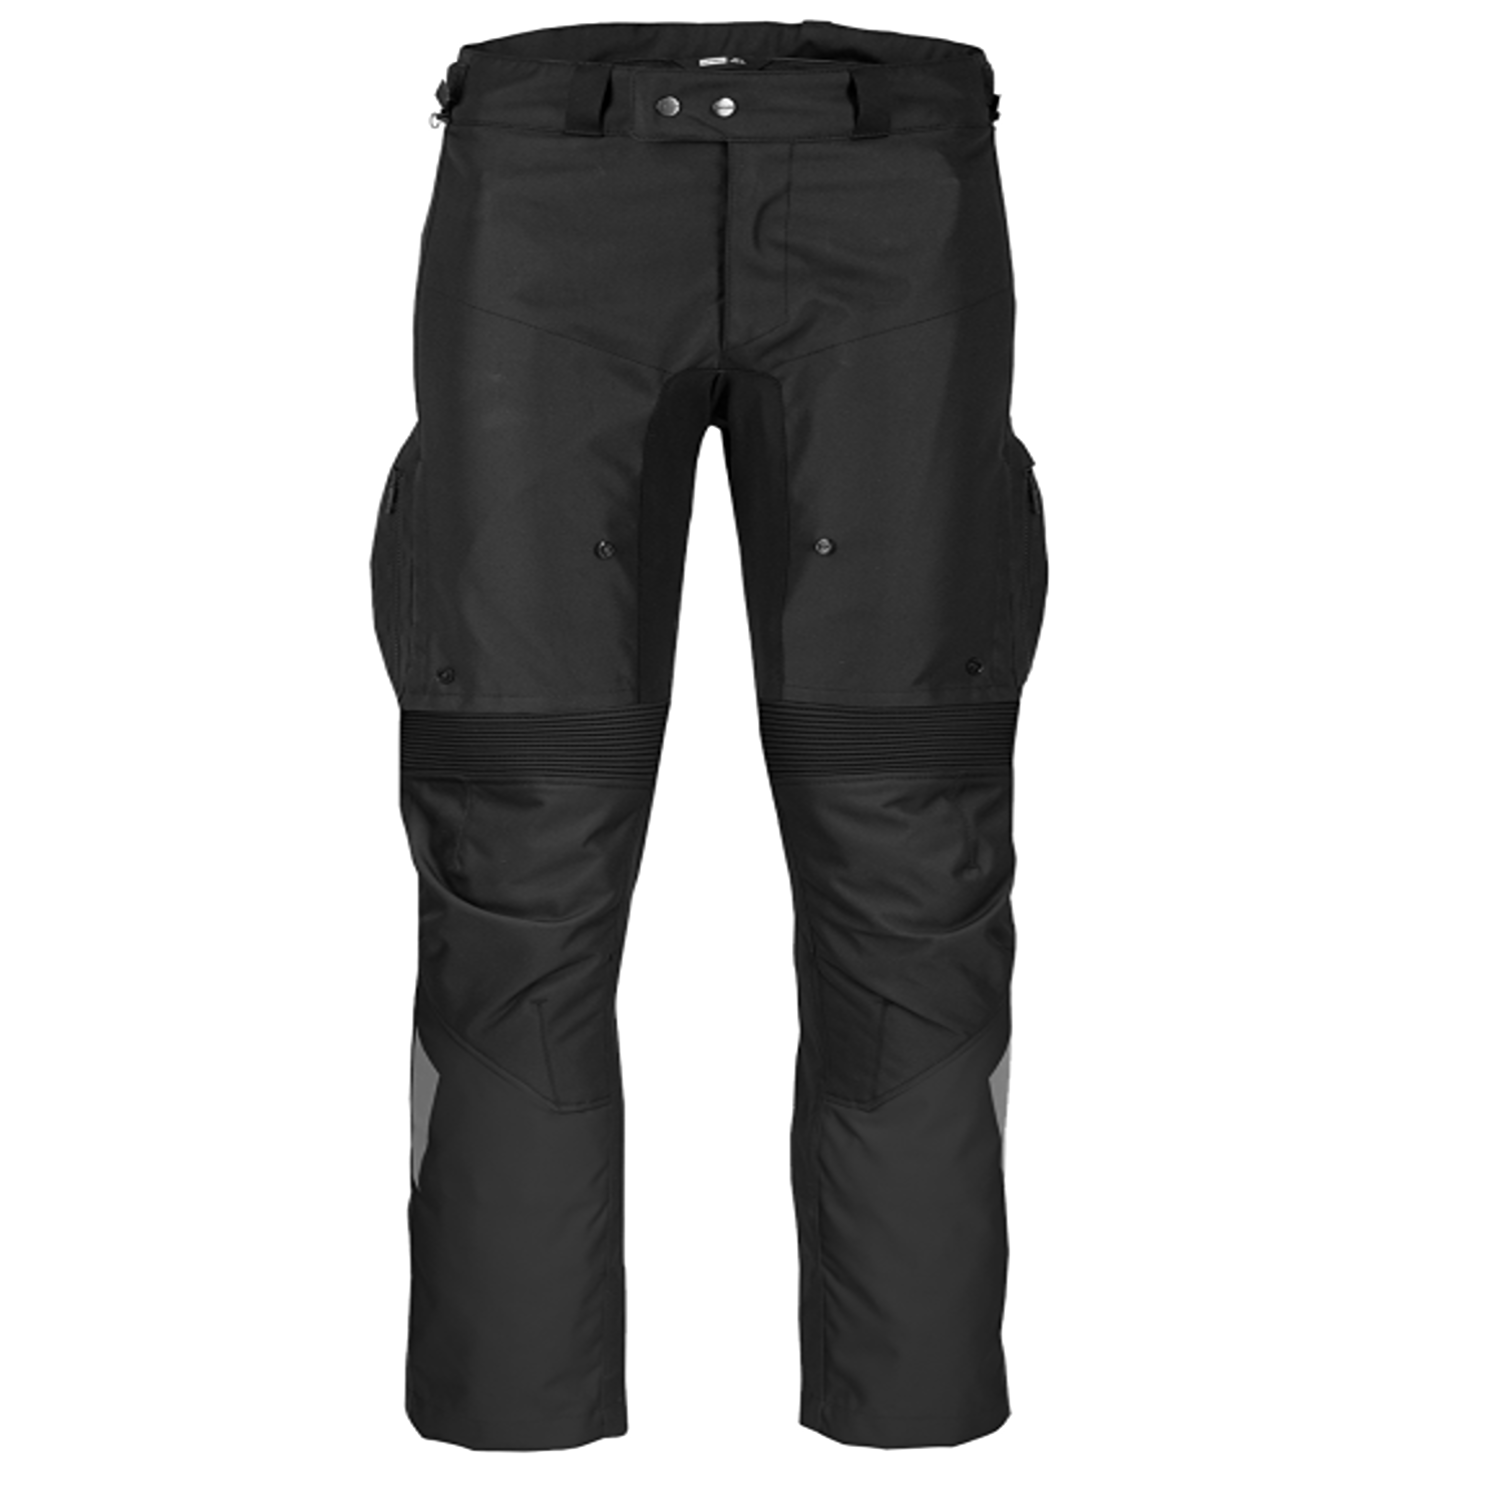 Image of Spidi Crossmaster Short Pants Black Size 4XL ID 8030161463866